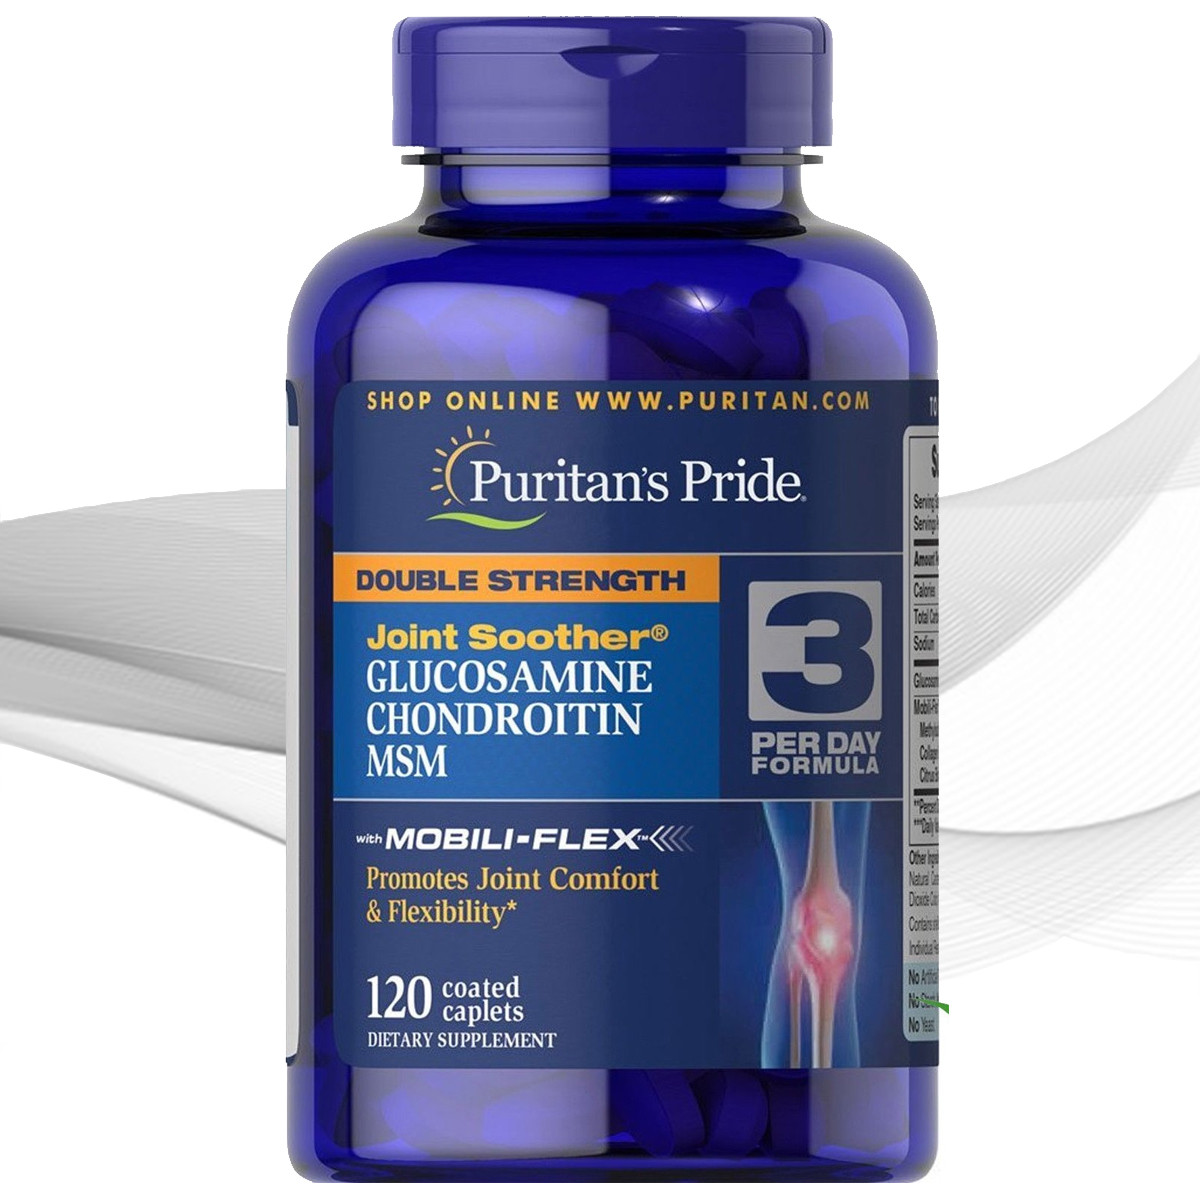 Puritans pride Chondroitin Glucosamine msm 120 caps